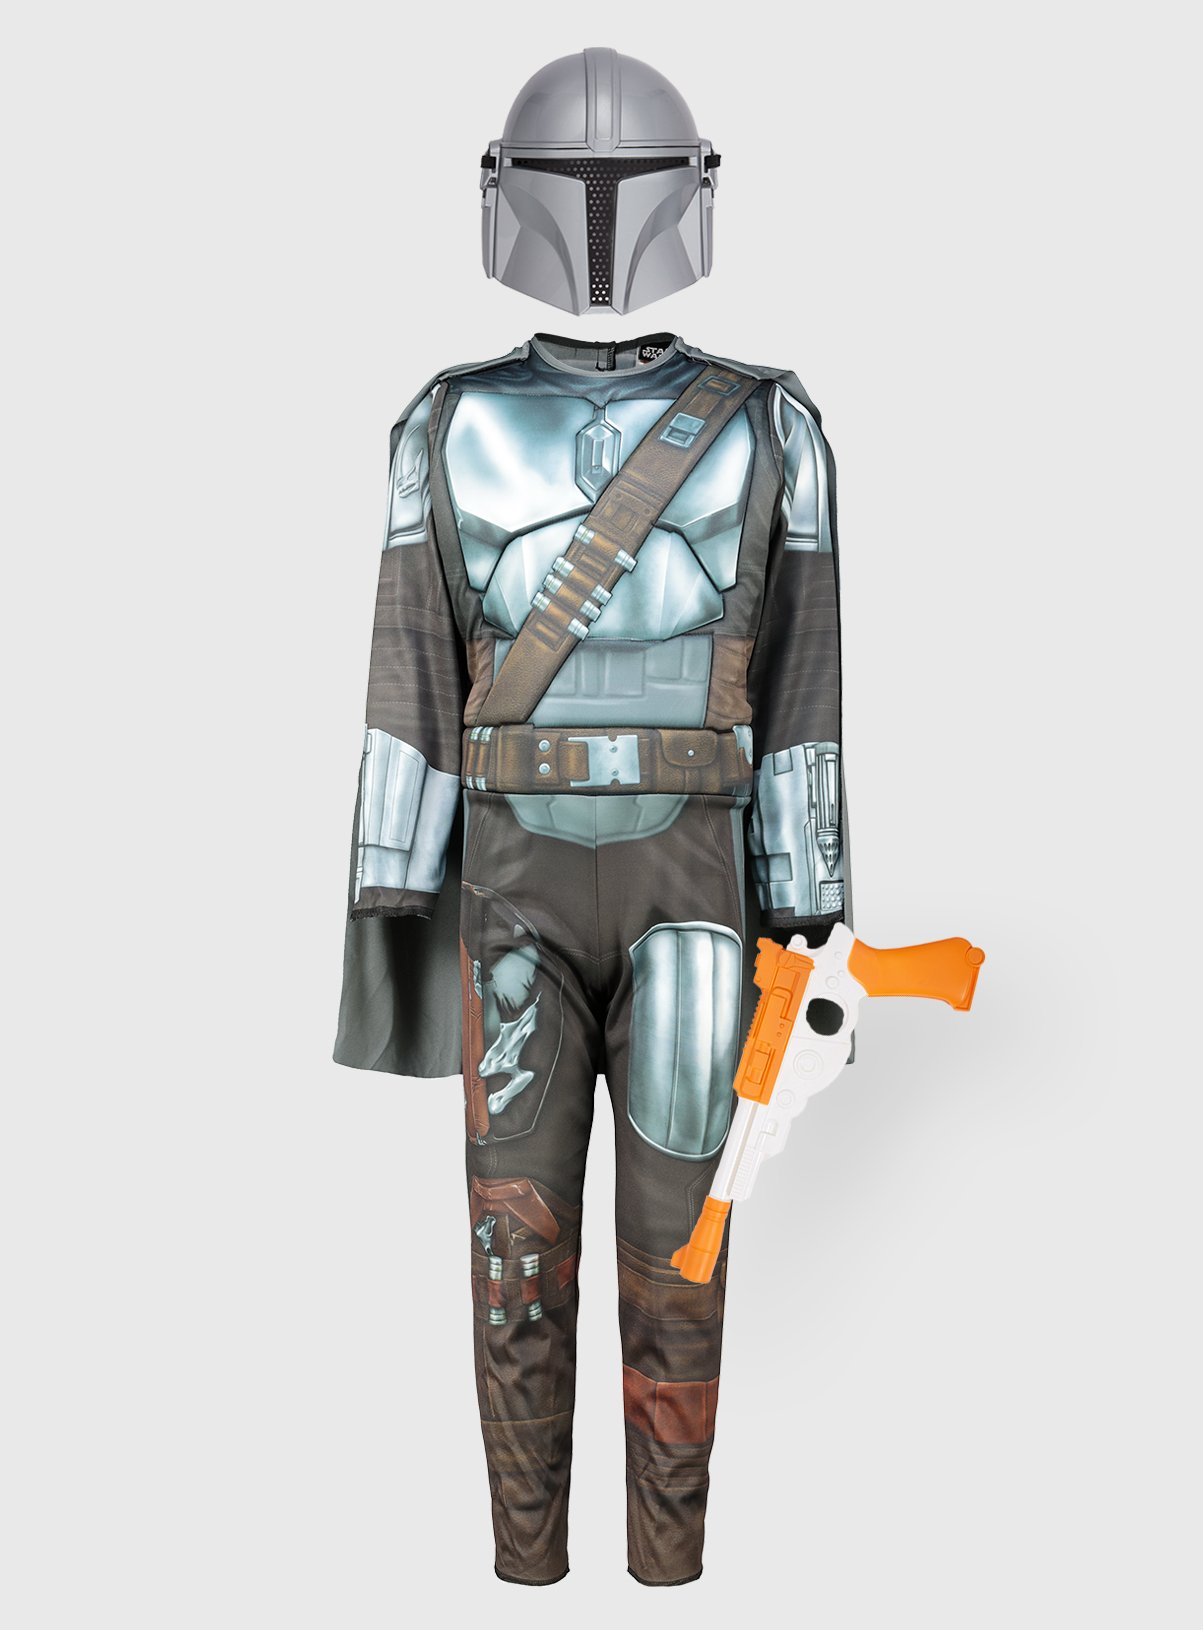 Buy Star Wars Mandalorian Costume Set - One Size